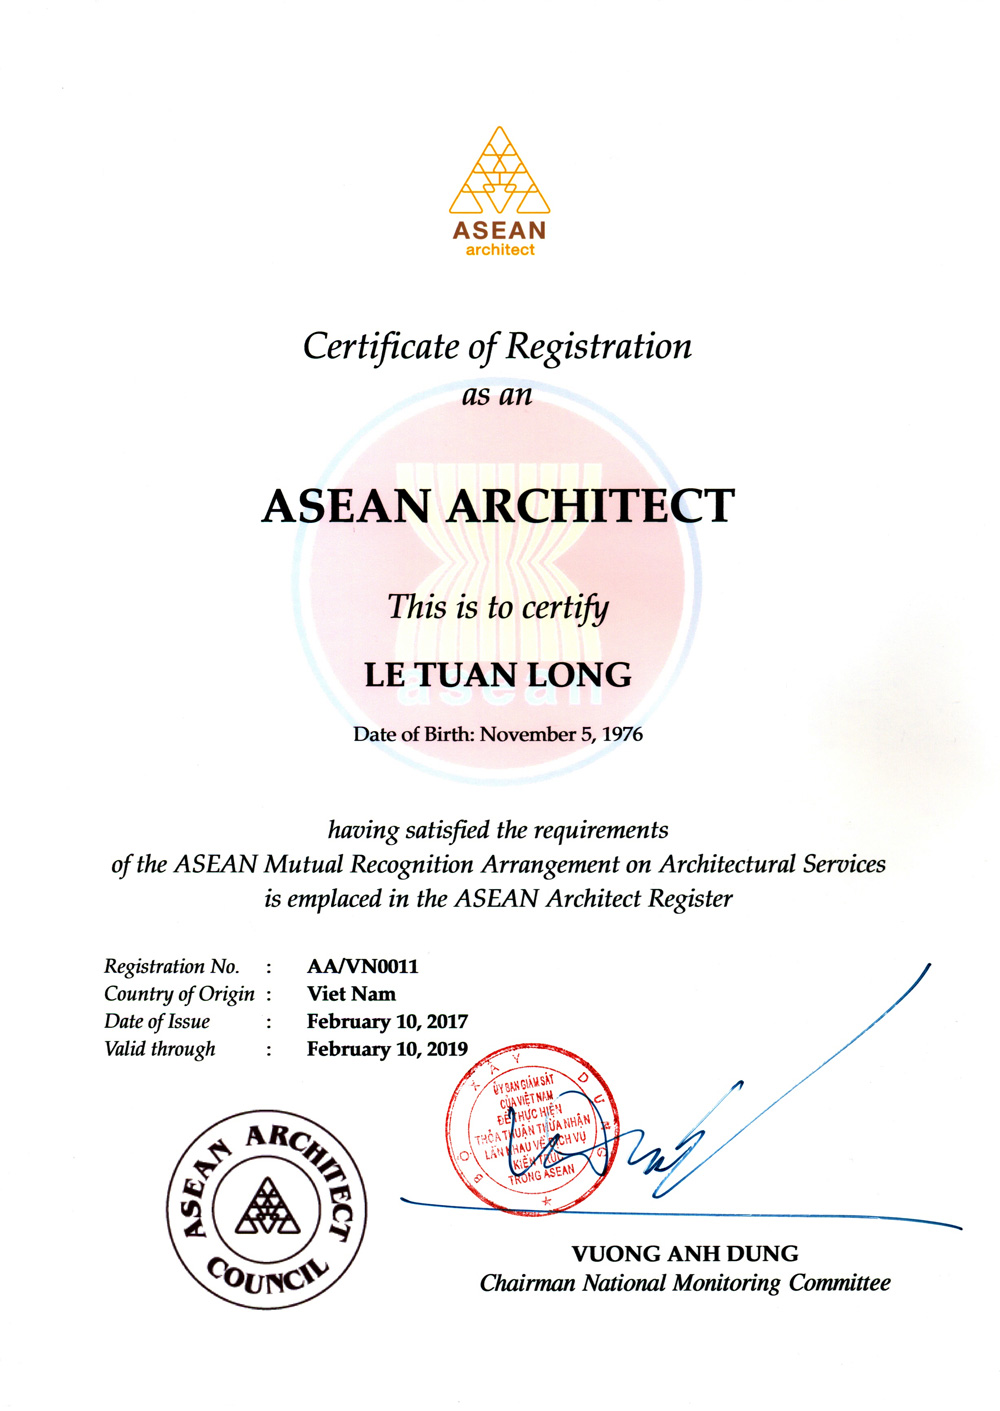 Le-Tuan-Long-asean-architecture